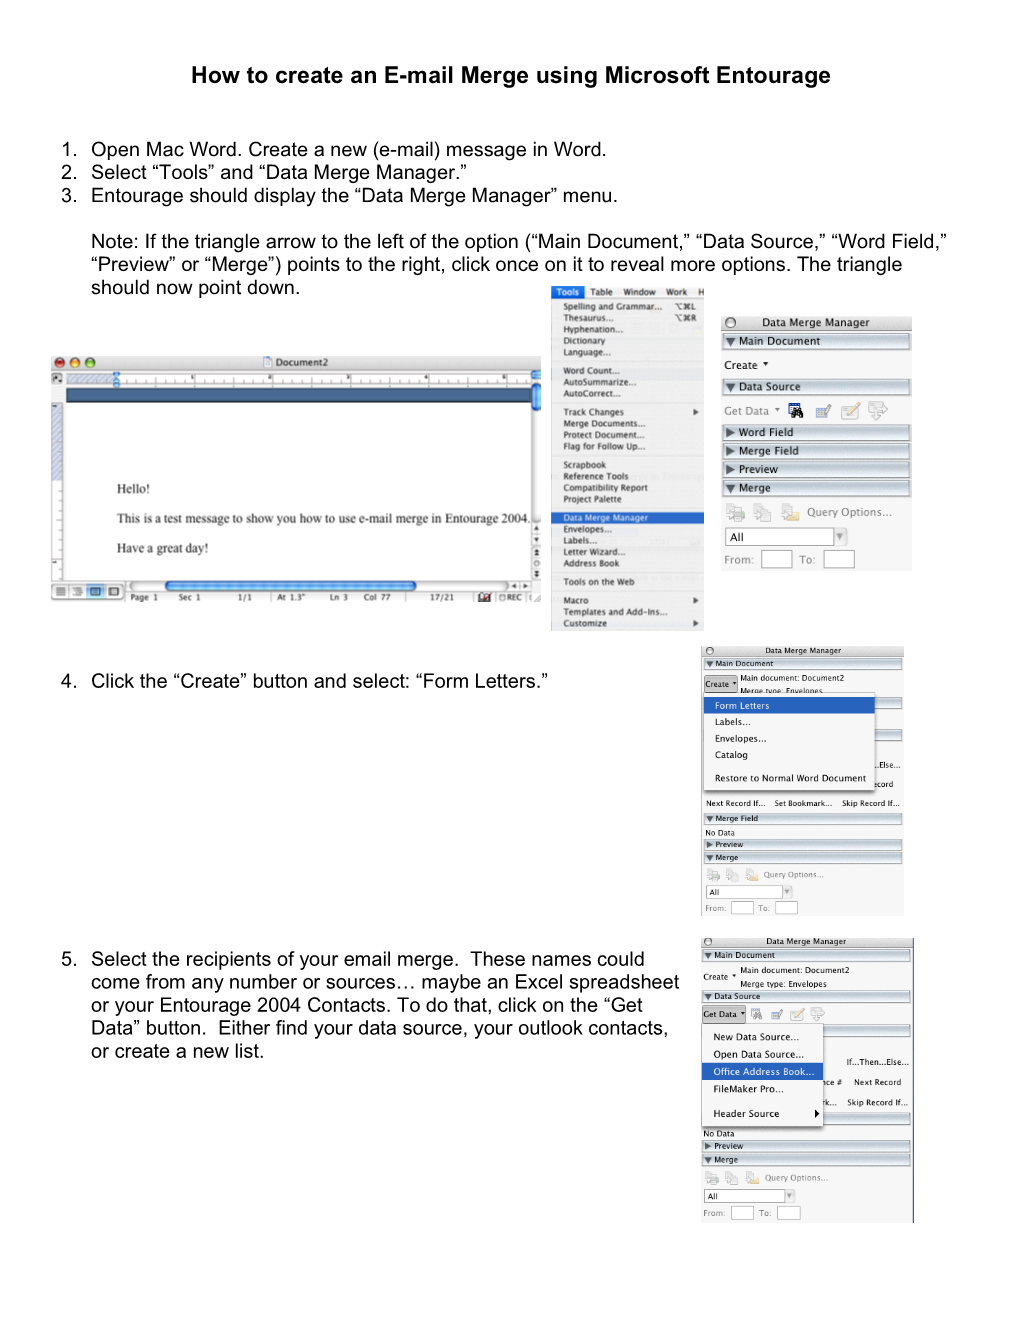 How to Create an E-Mail Merge Using Microsoft Entourage